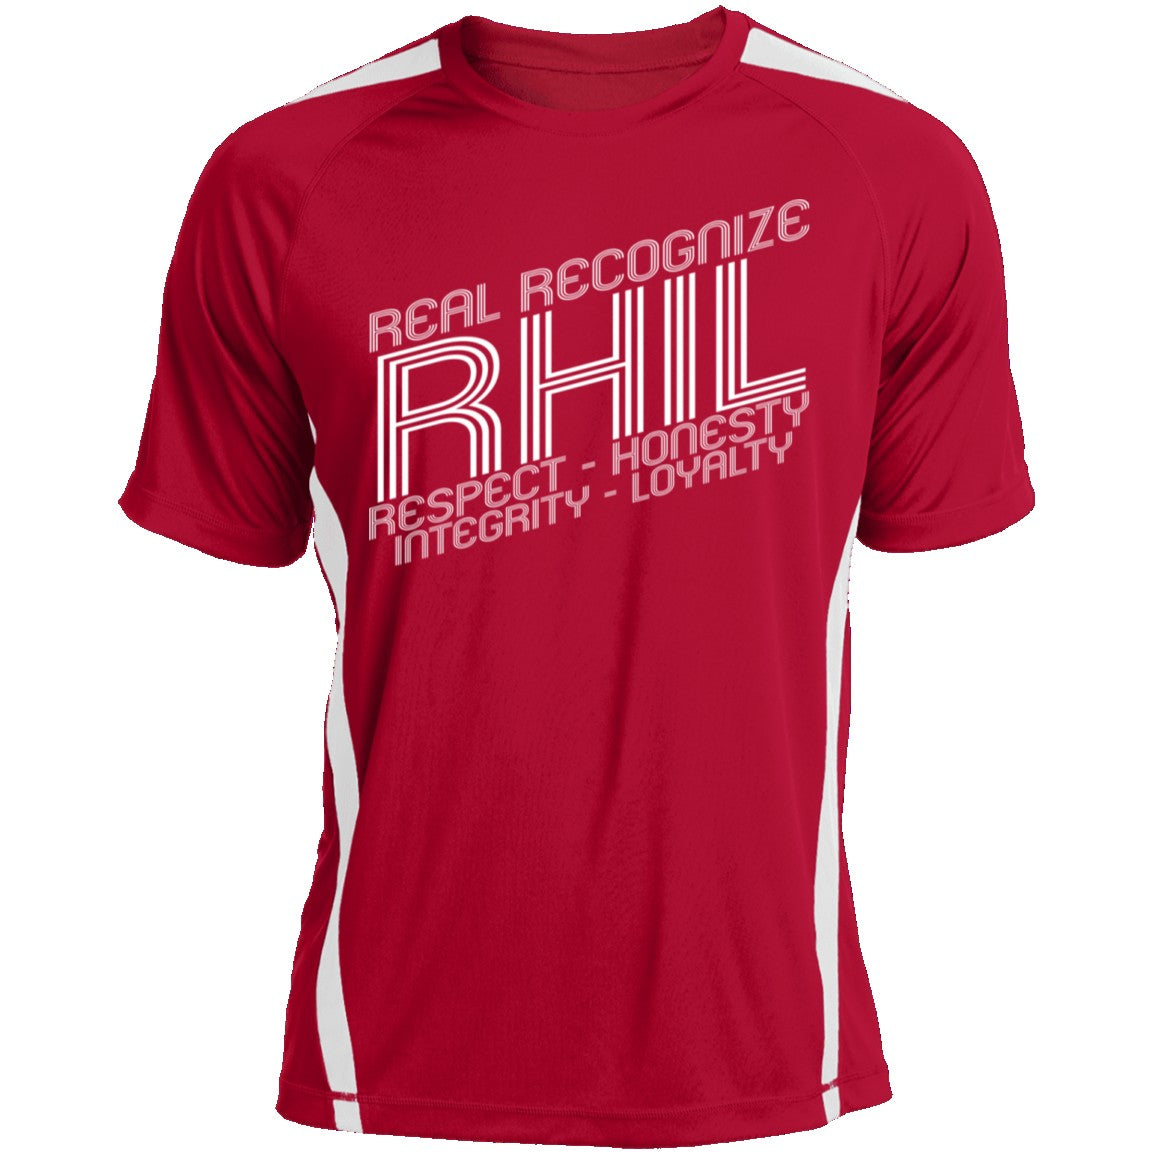 Real Recognize RHIL (Respect, Honesty, Integrity, Loyalty) Colorblock Dry Zone Crew CustomCat